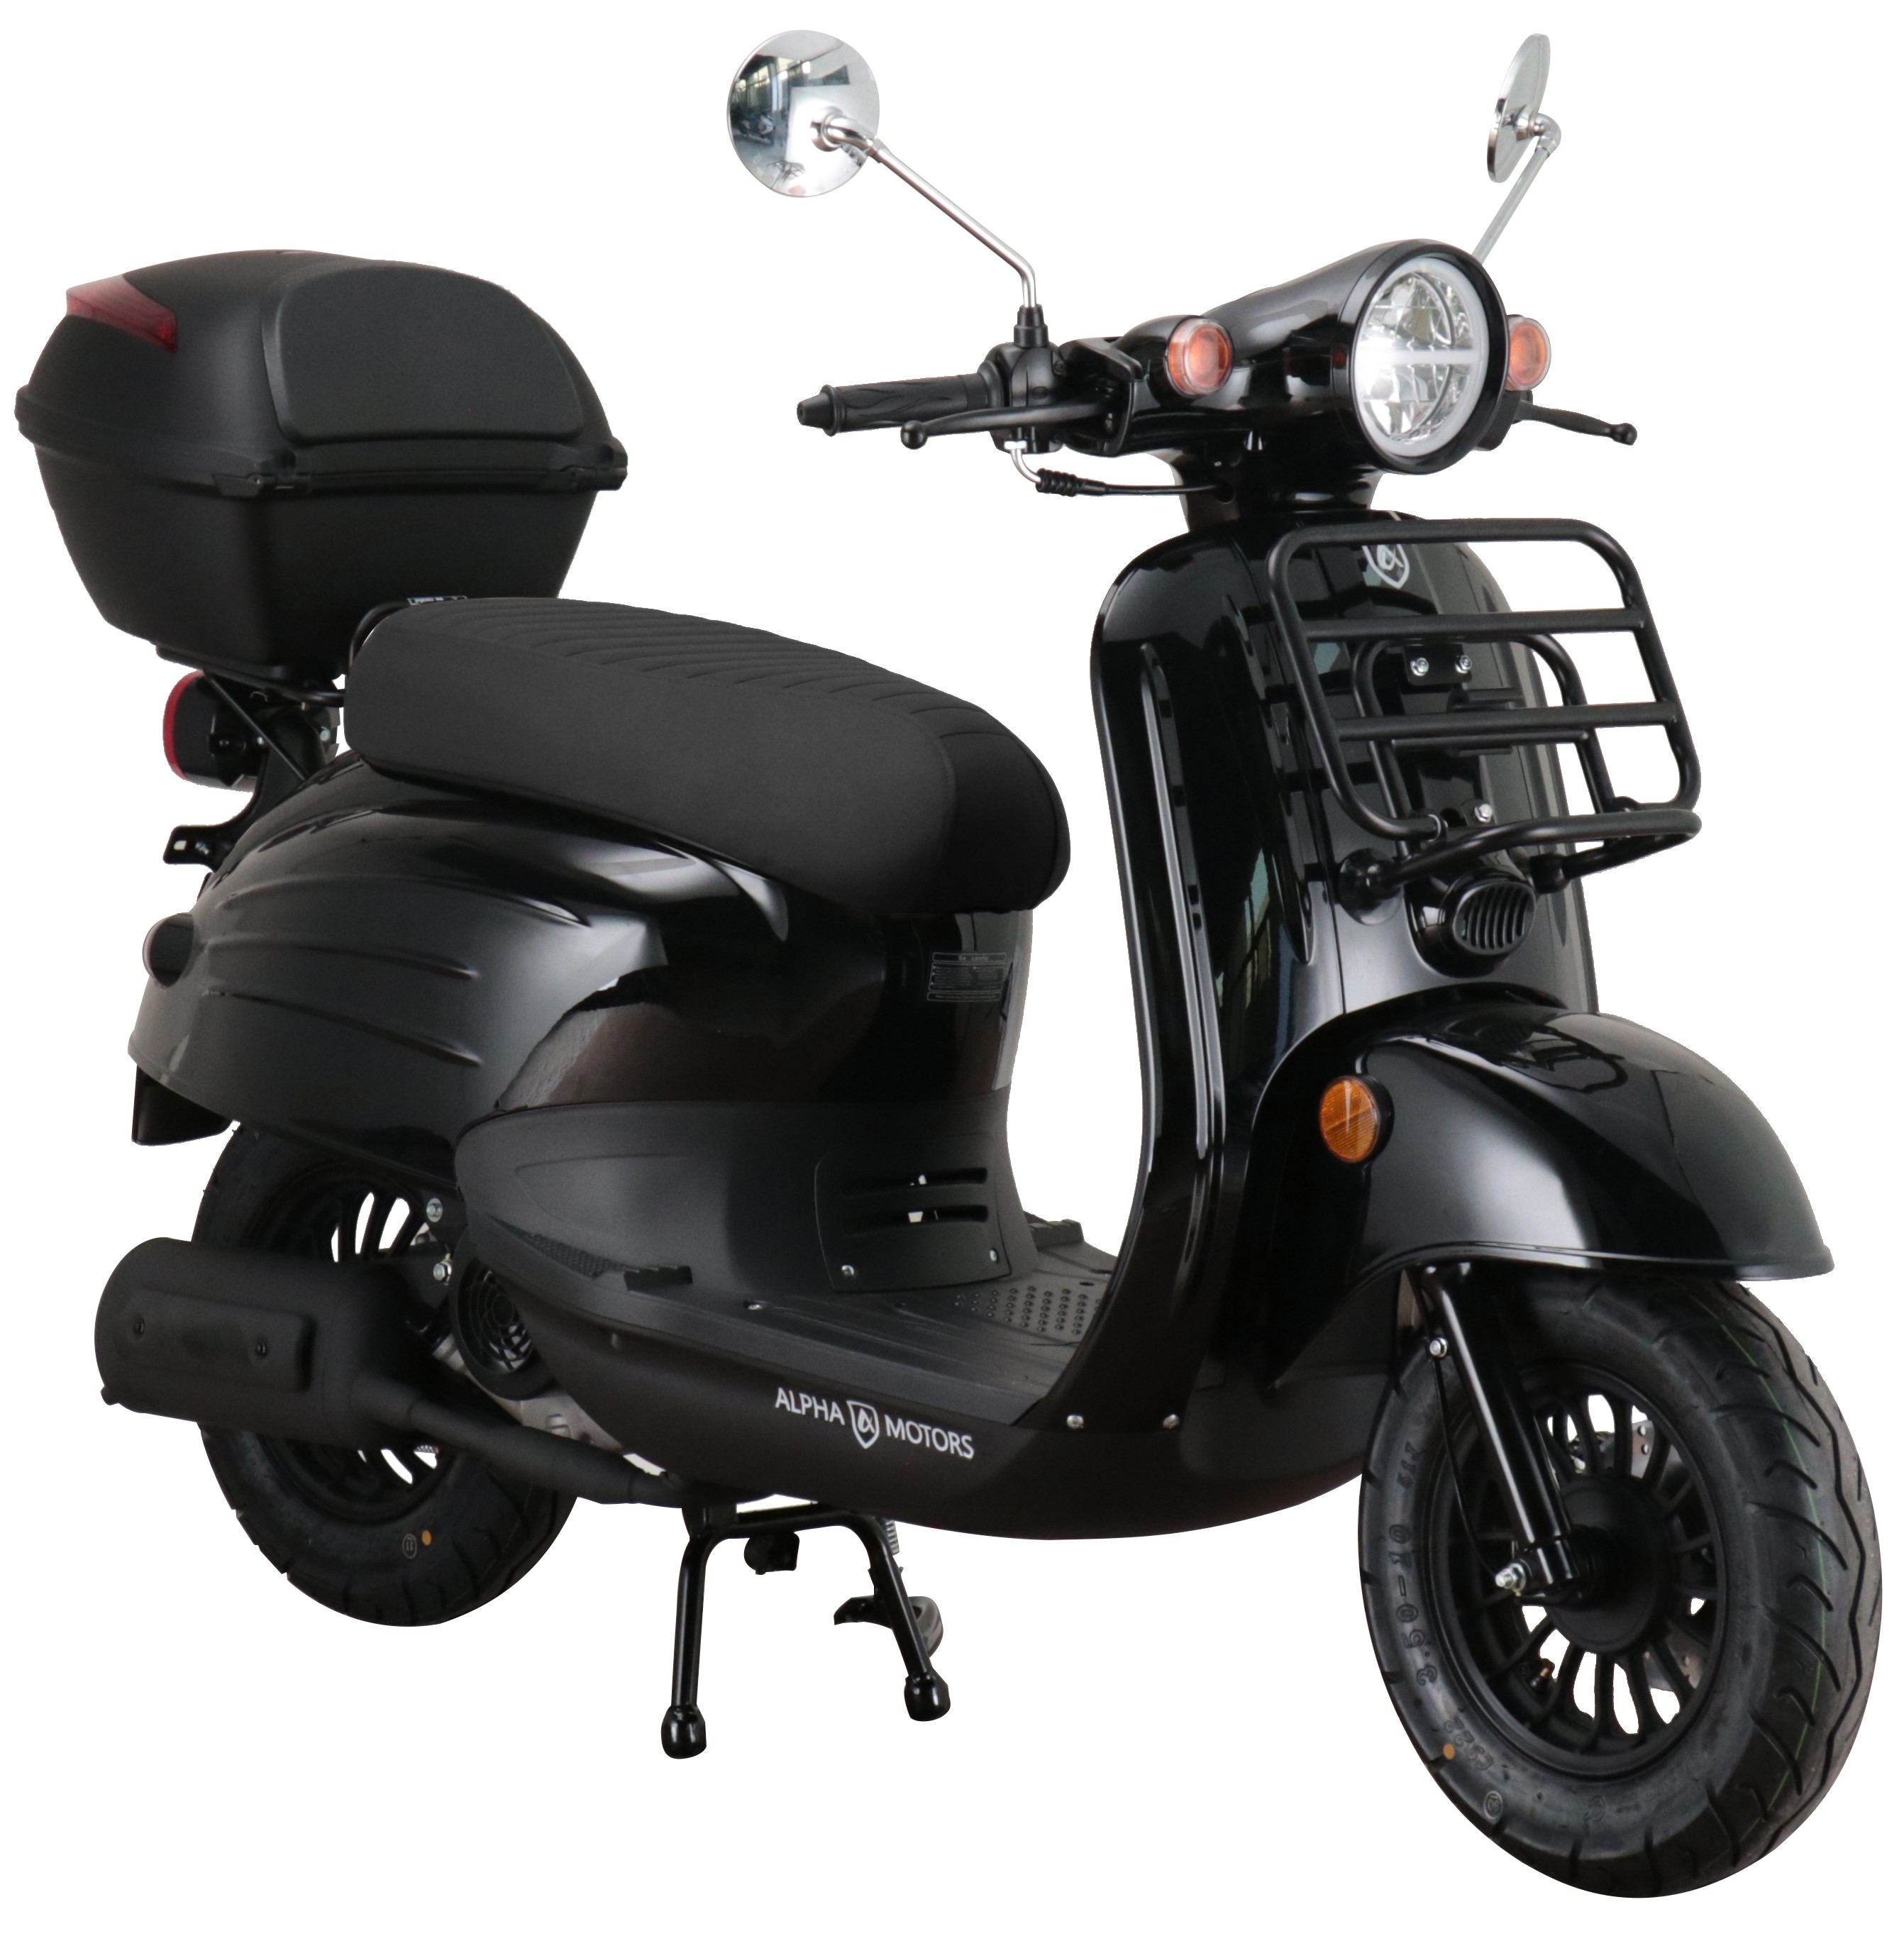 ccm Adria km/h Motorroller 5 50 45 EURO